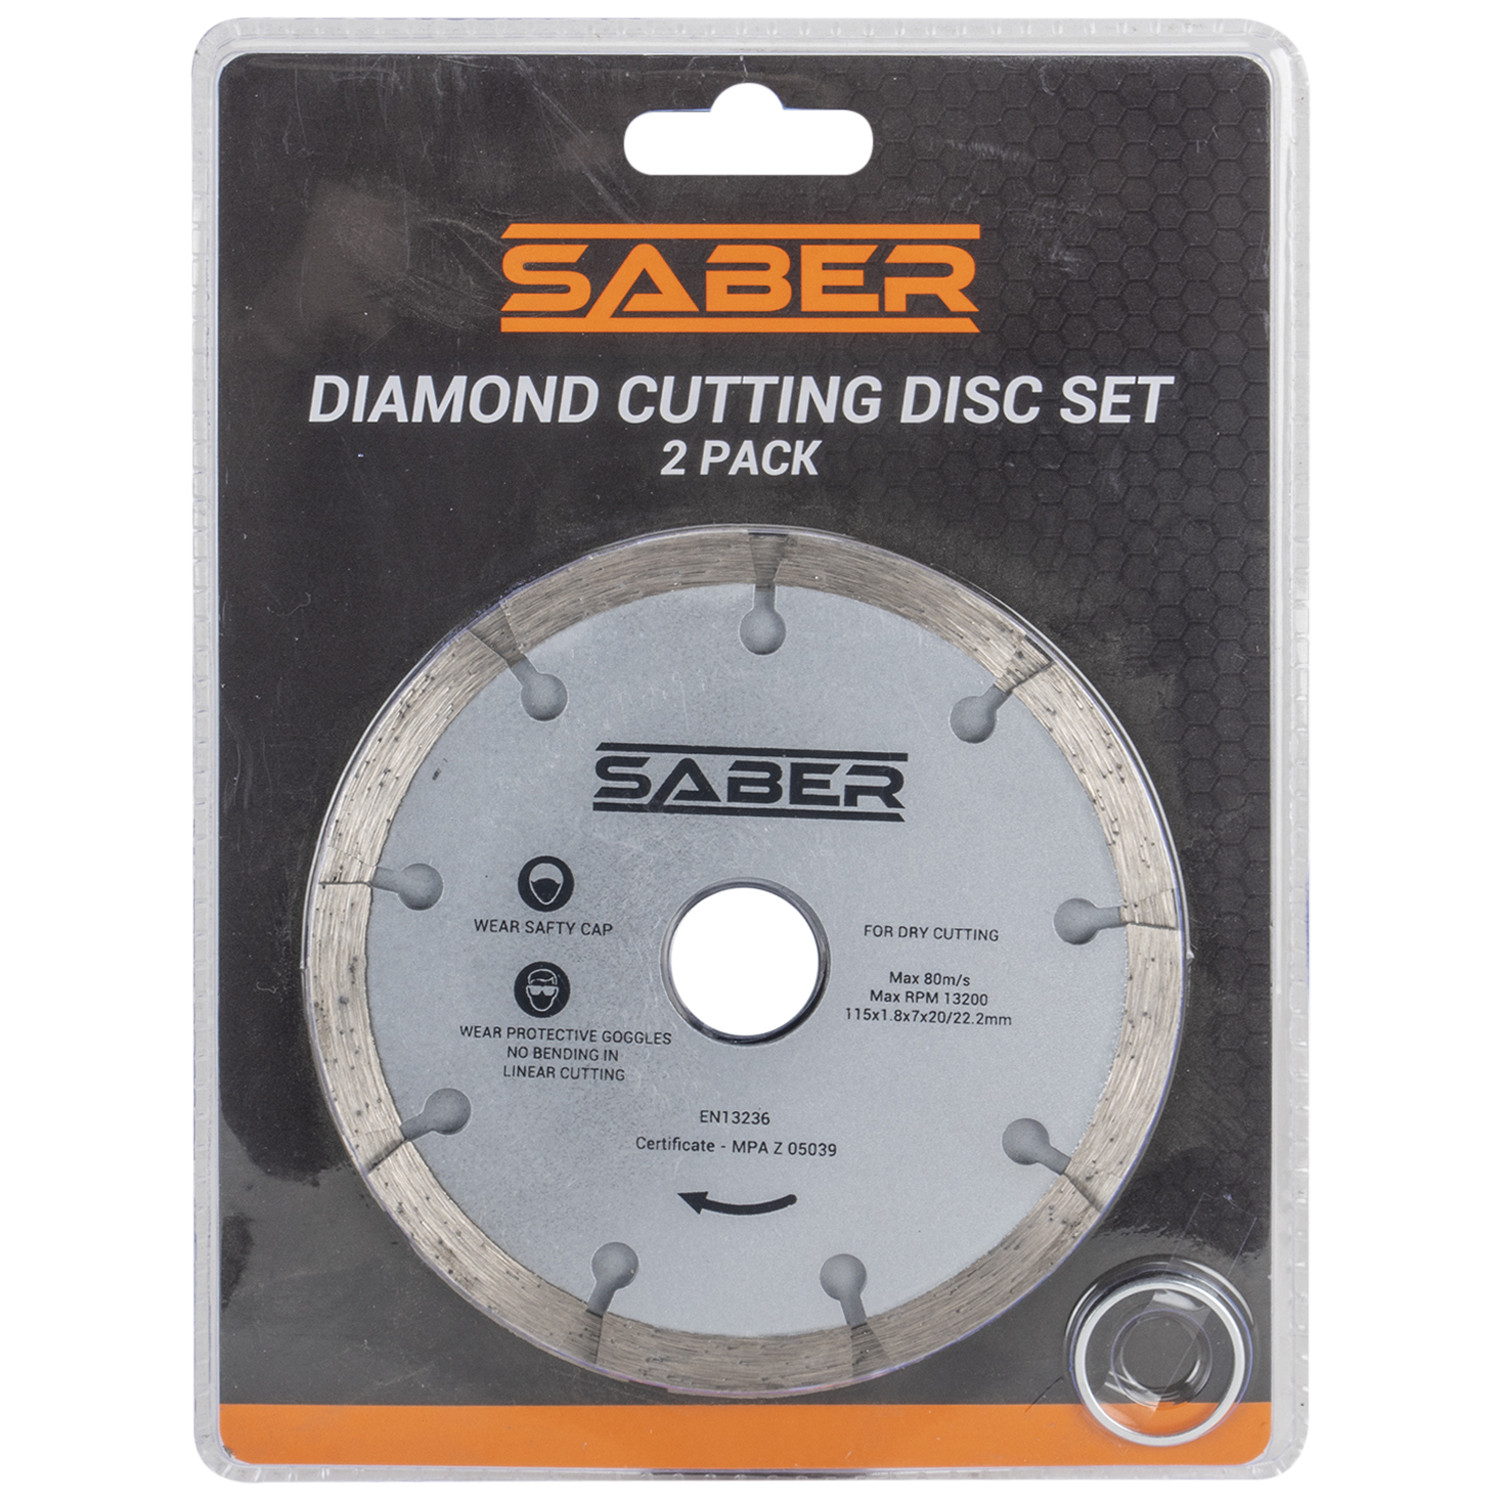 Saber Diamond Cutting Disc 2 Pack Image